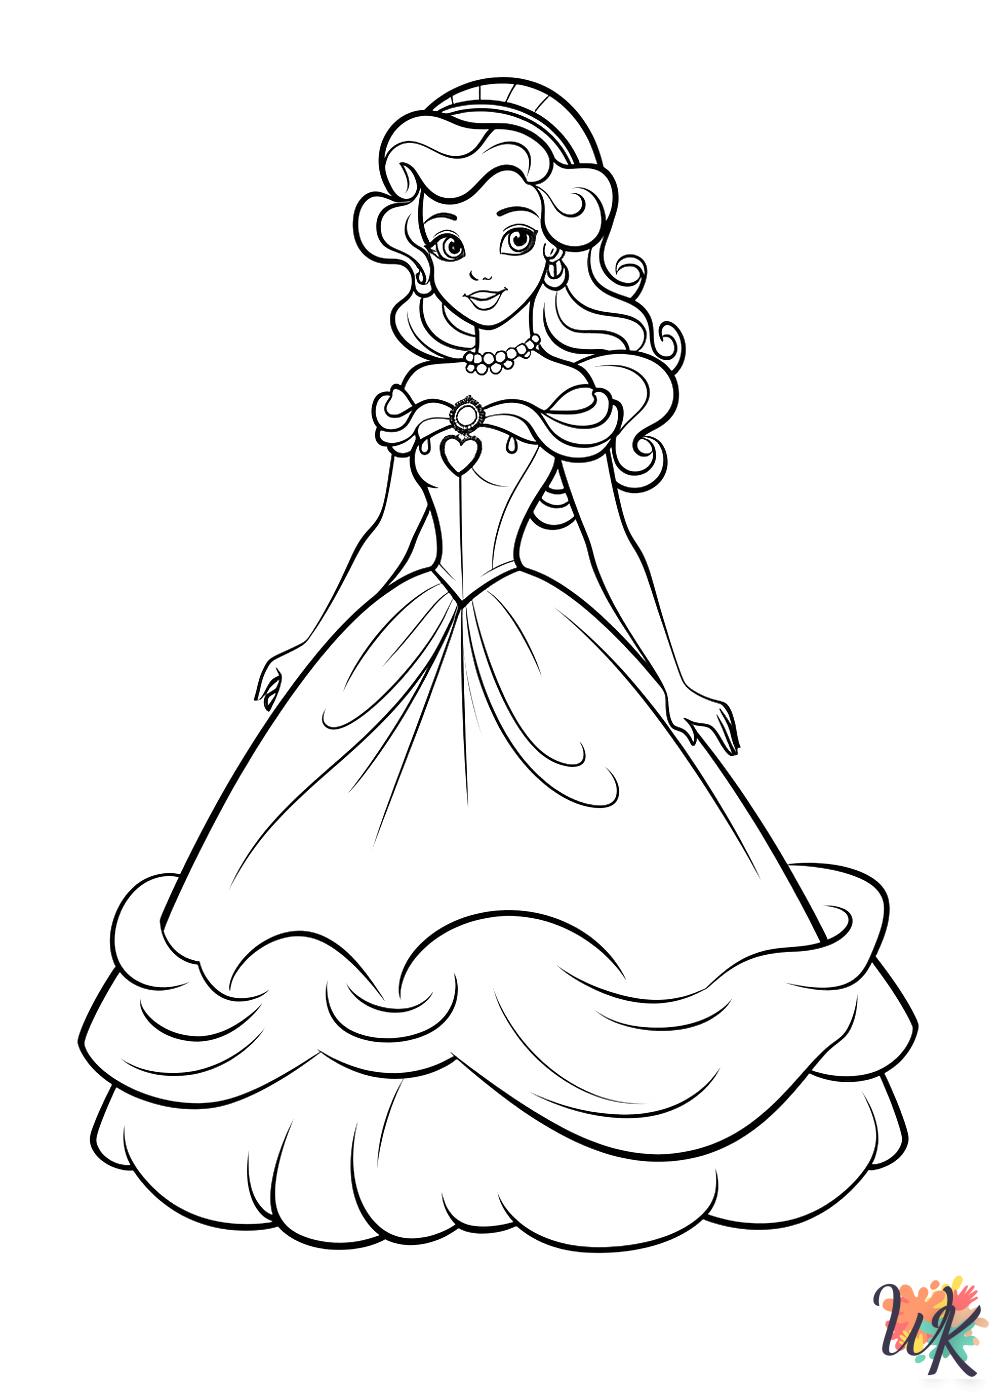 Cinderella coloring pages free